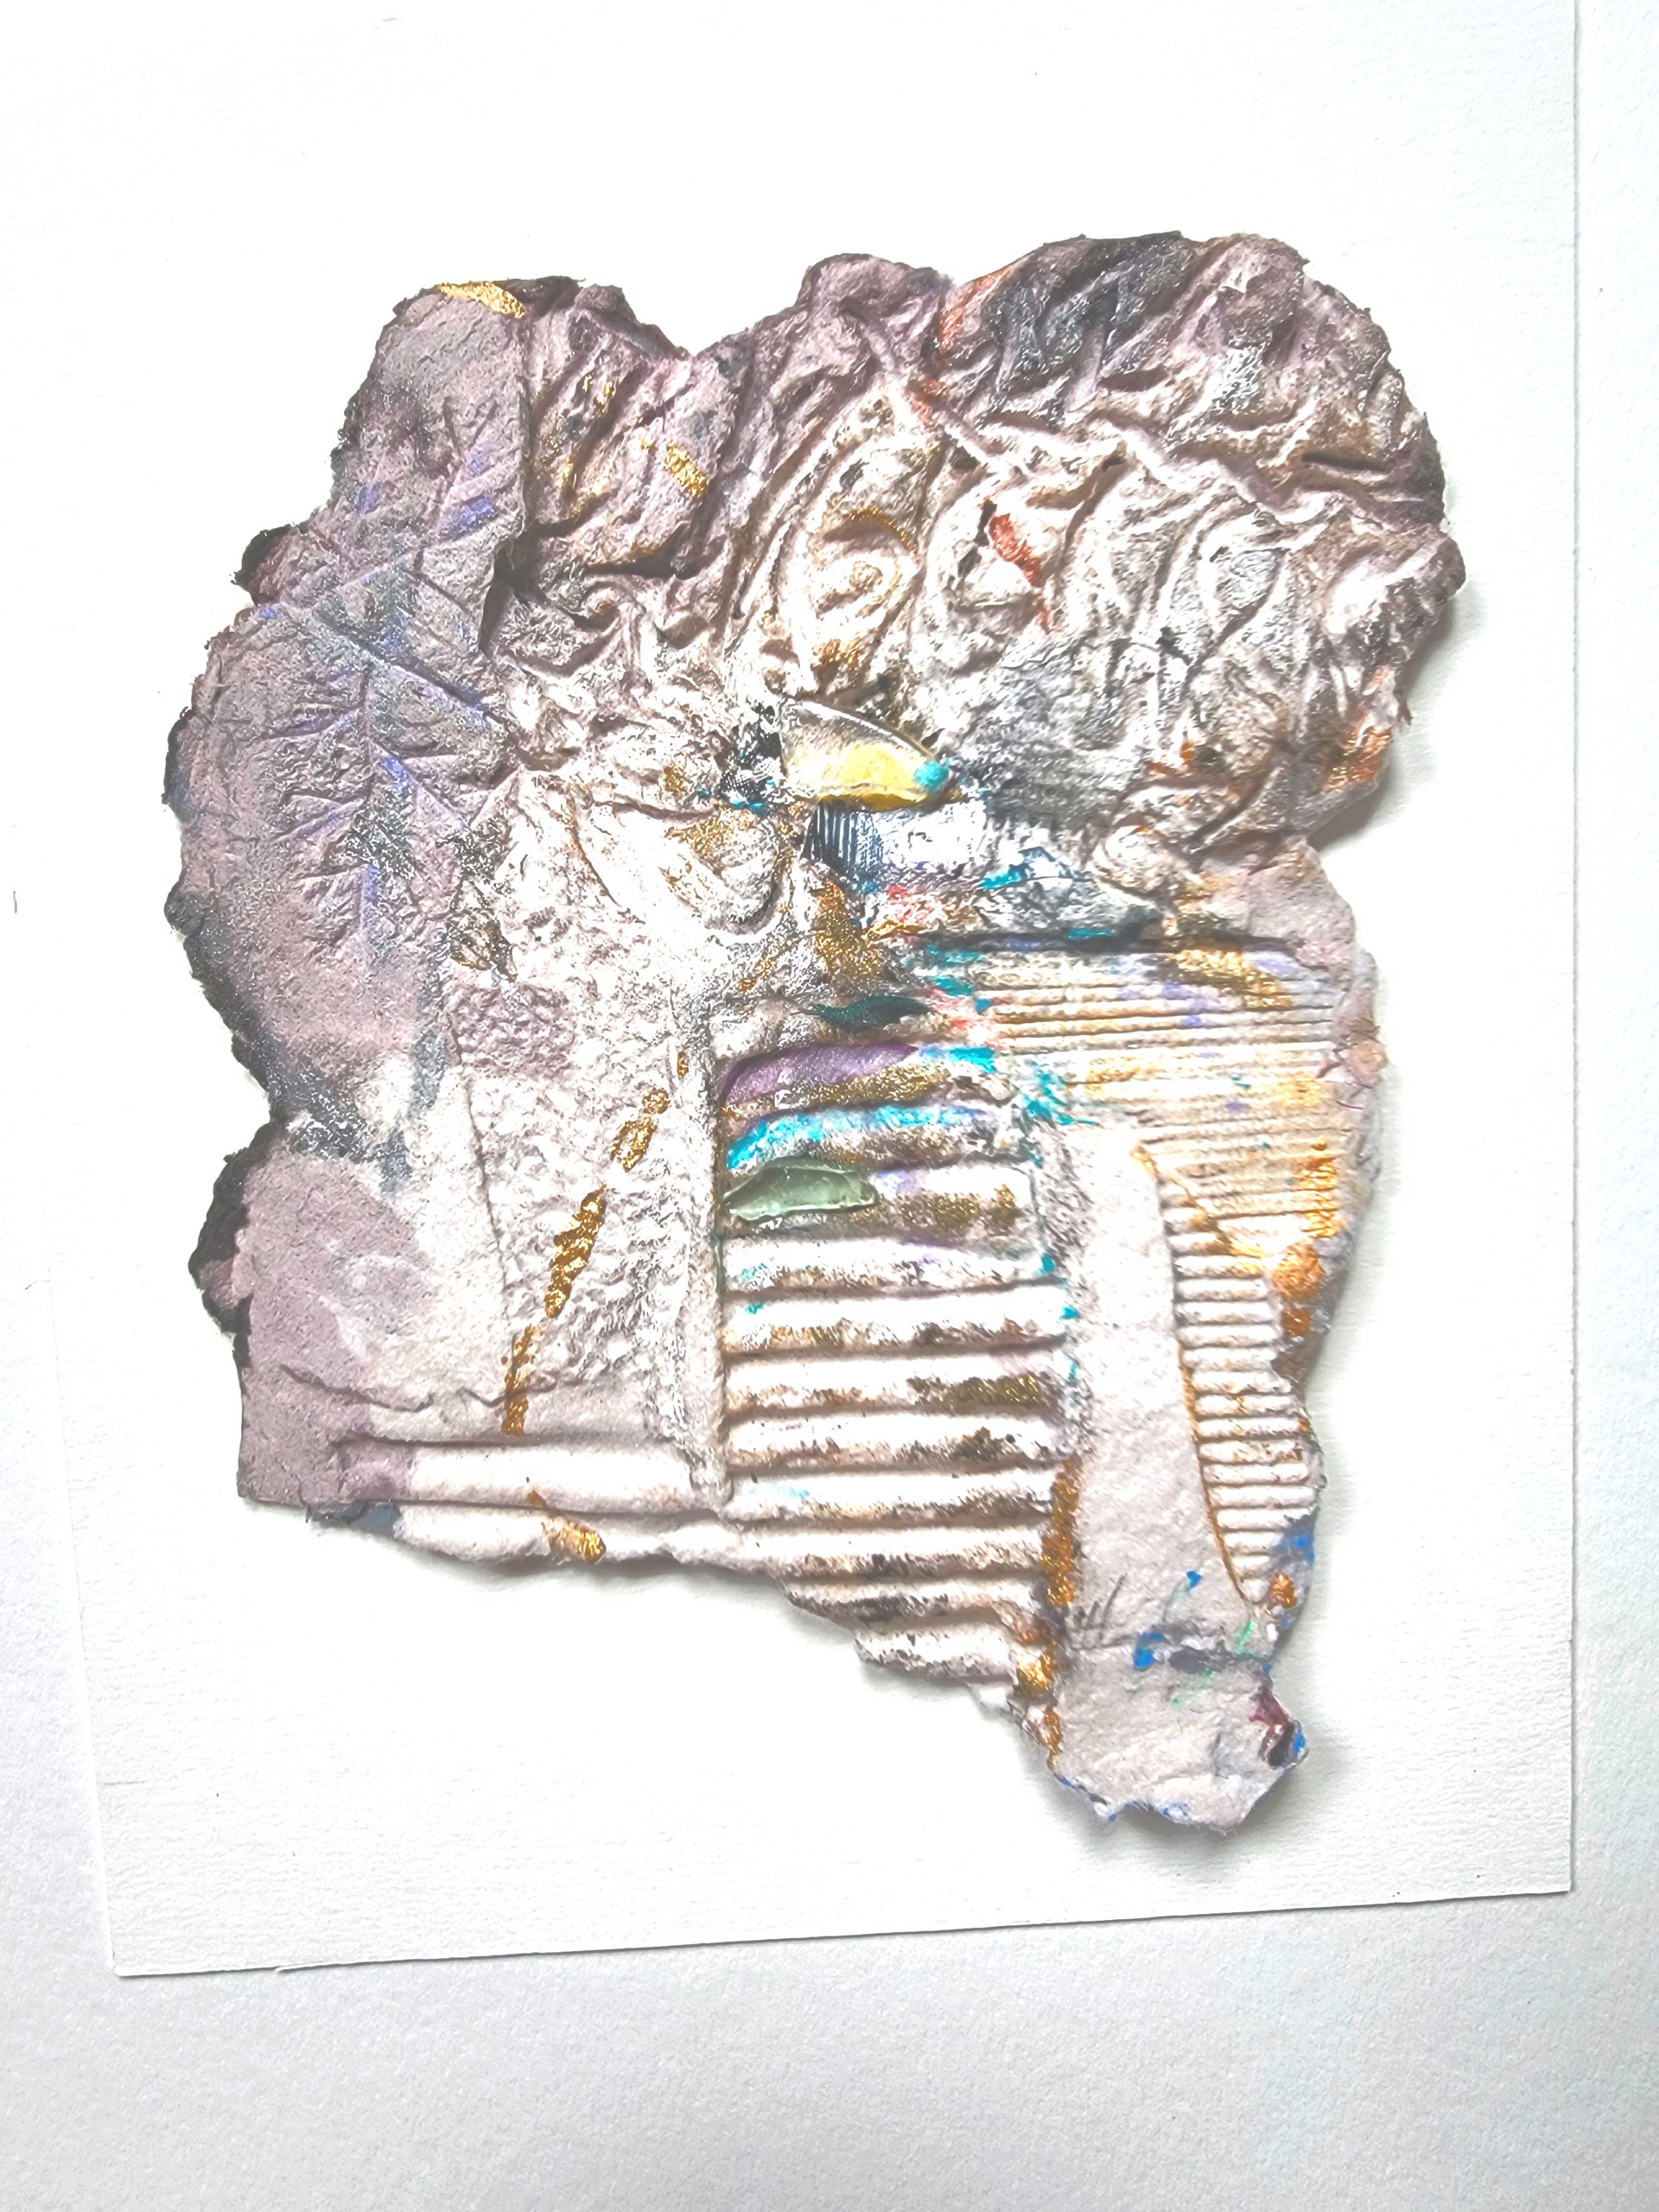 Fossil Fantasies by Rebecca Humphrey